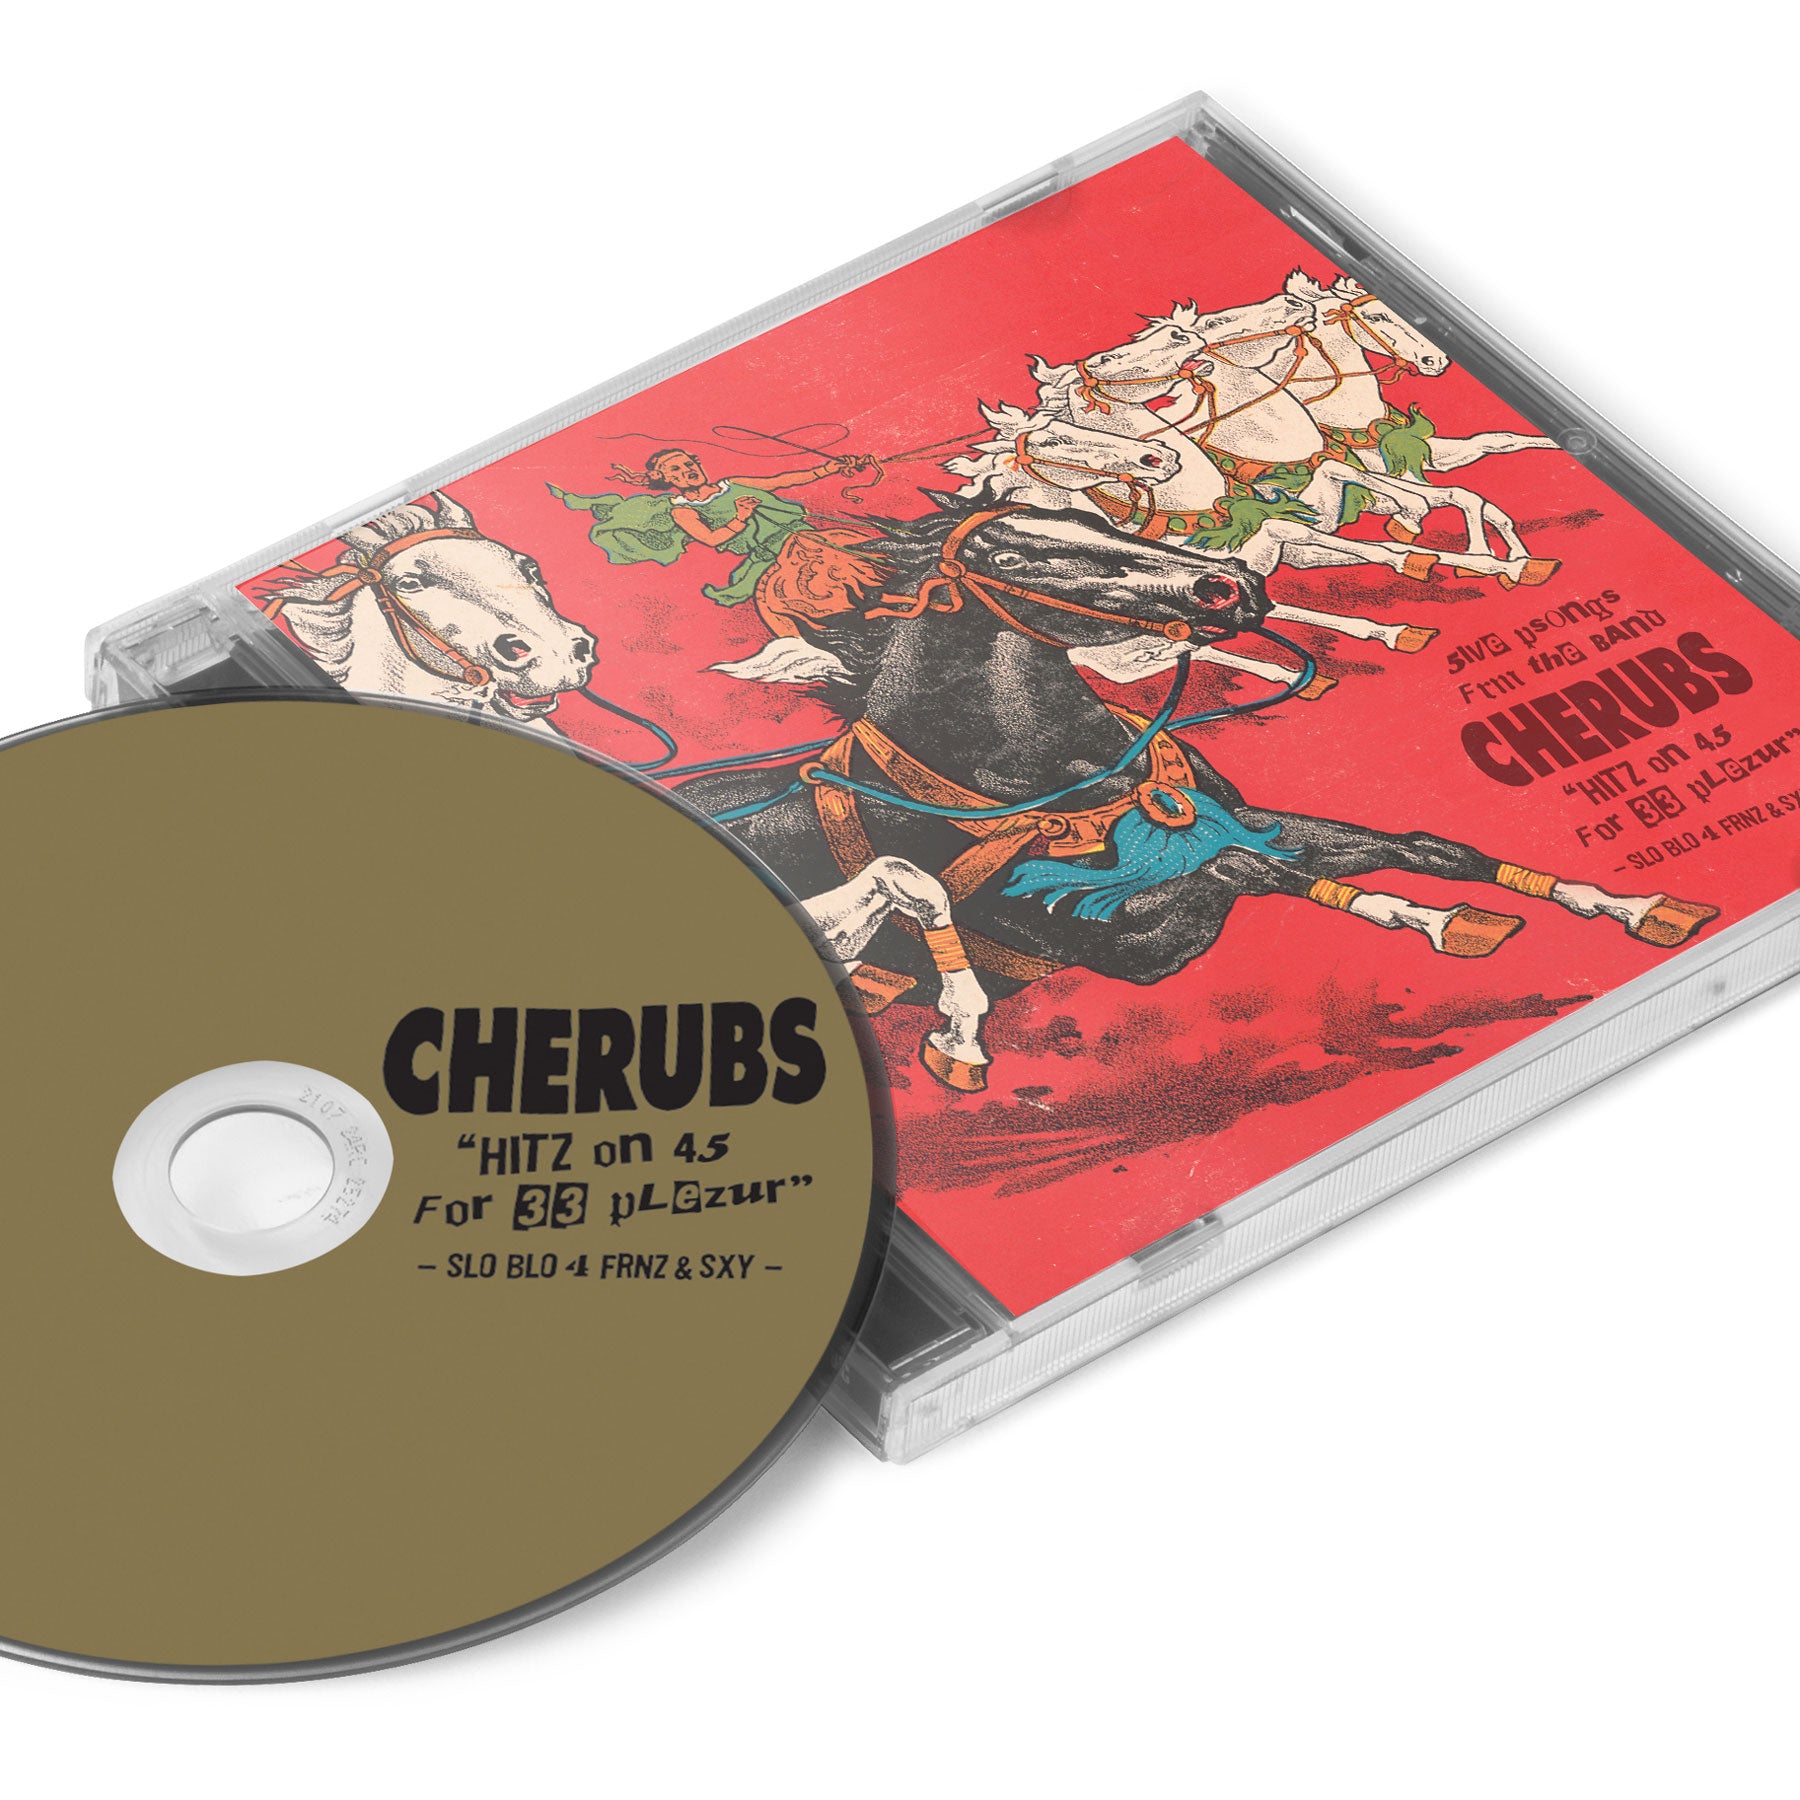 Cherubs "SLO BLO 4 FRNZ & SXY" CD